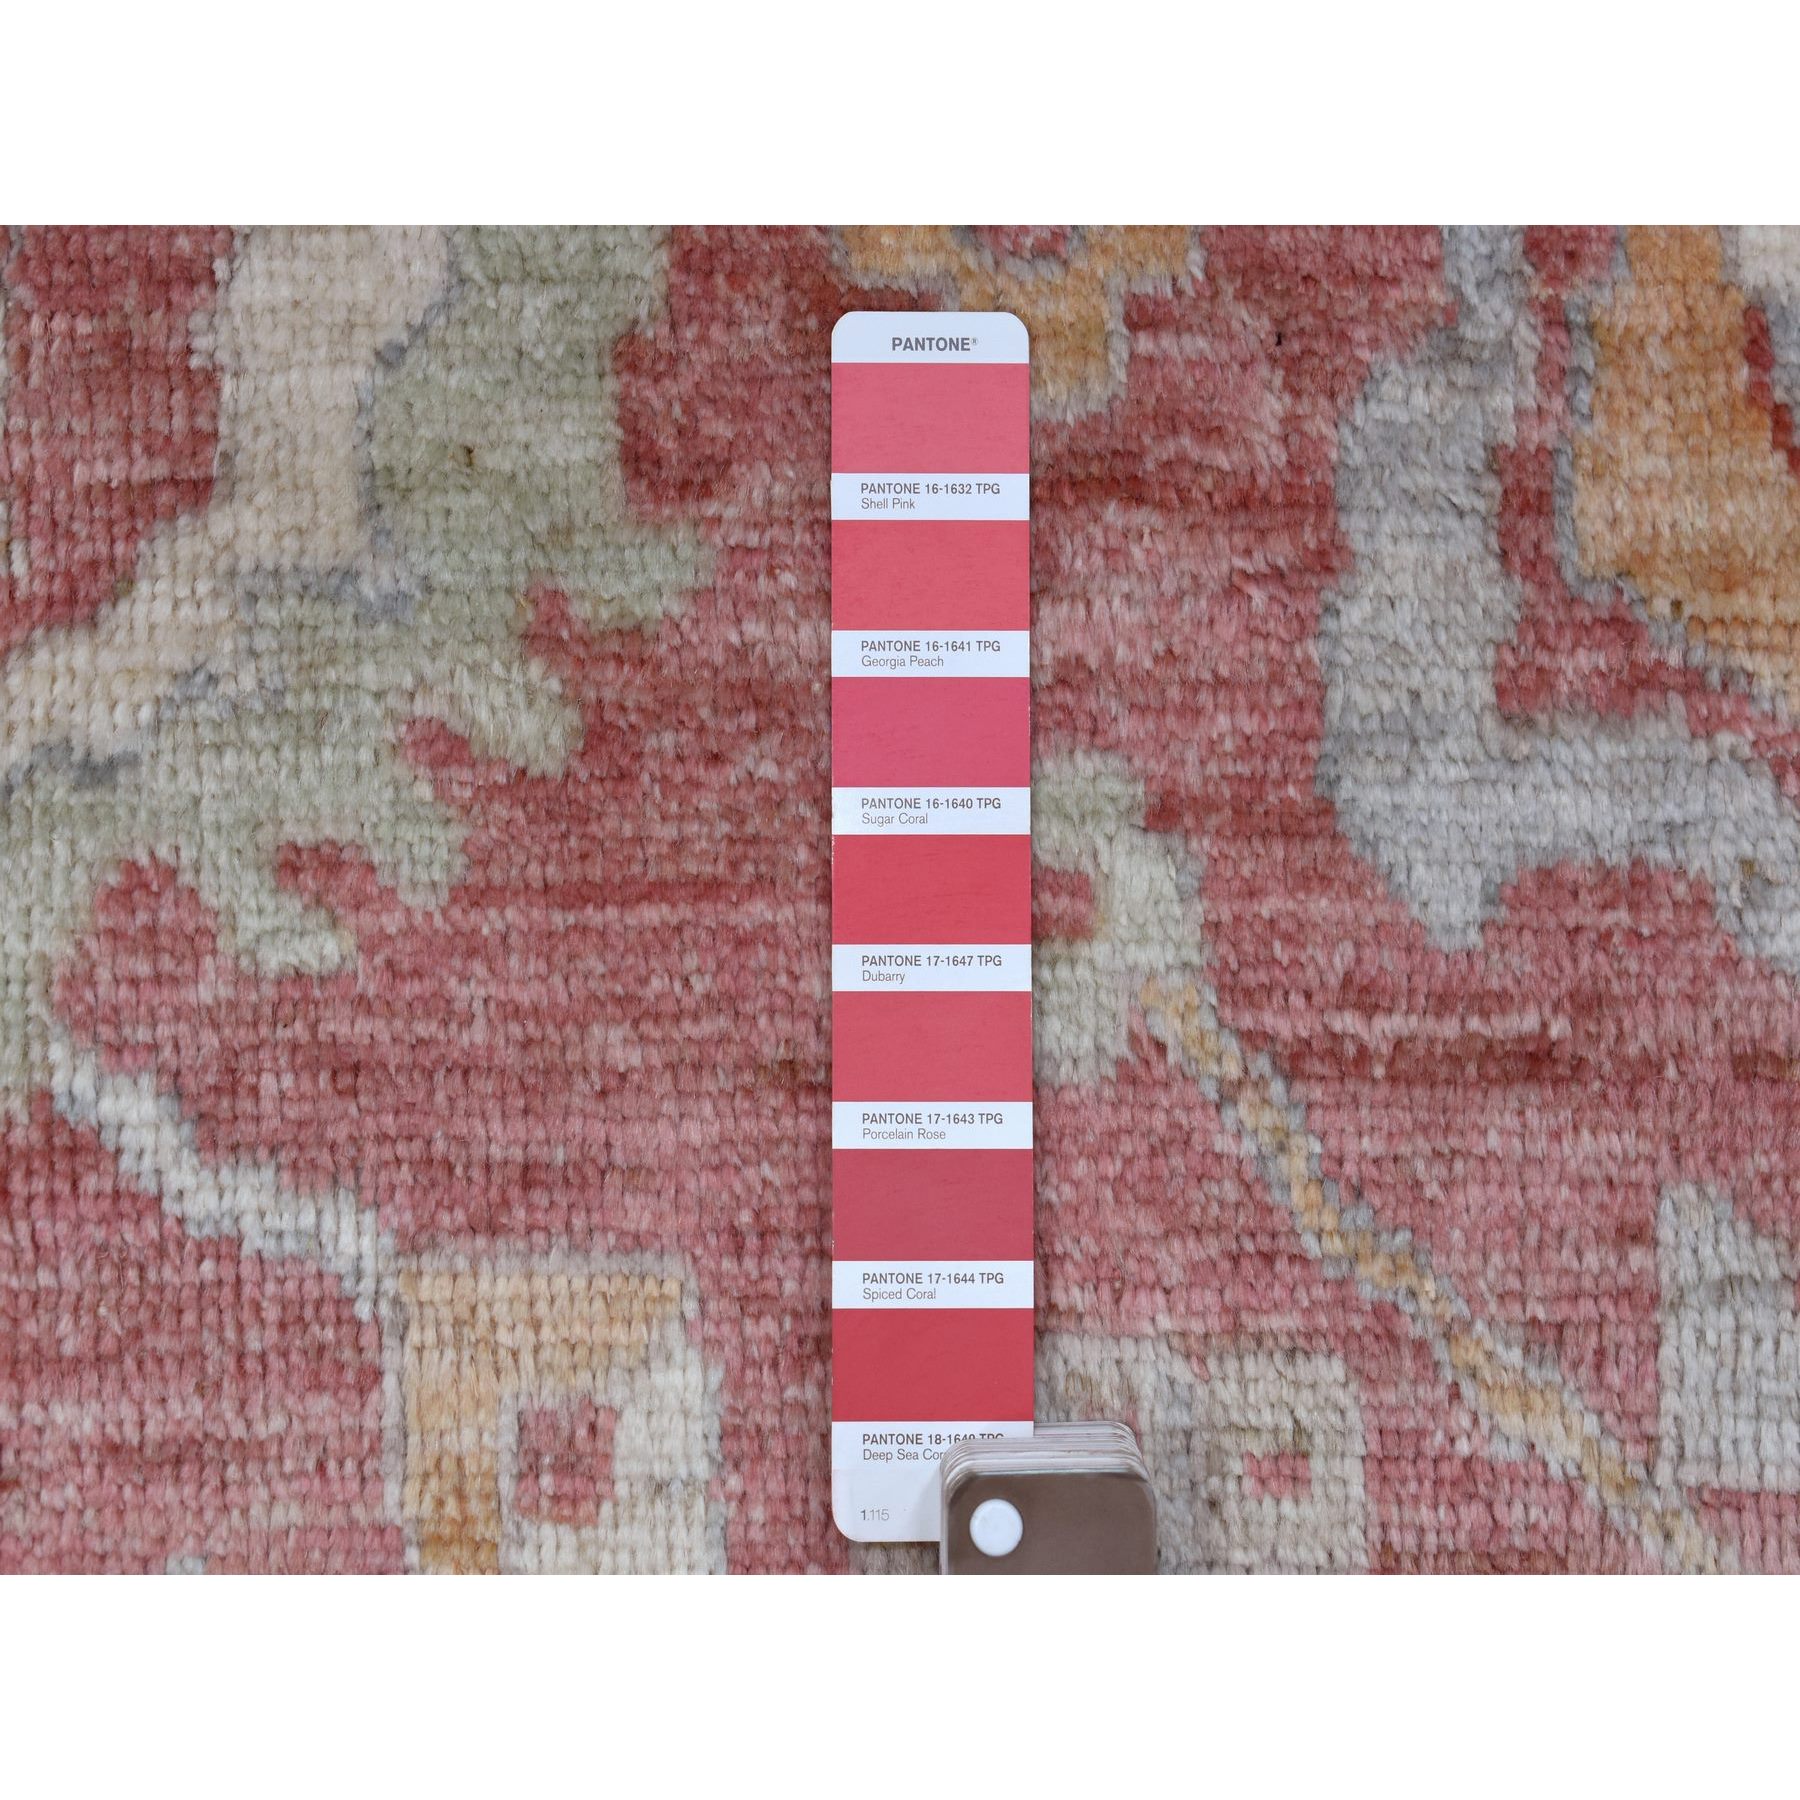 9'10"x13'9" Angora Ushak with Geometric Design Soft, Velvety Plush Wool Hand Woven Faded Red Oriental Rug 